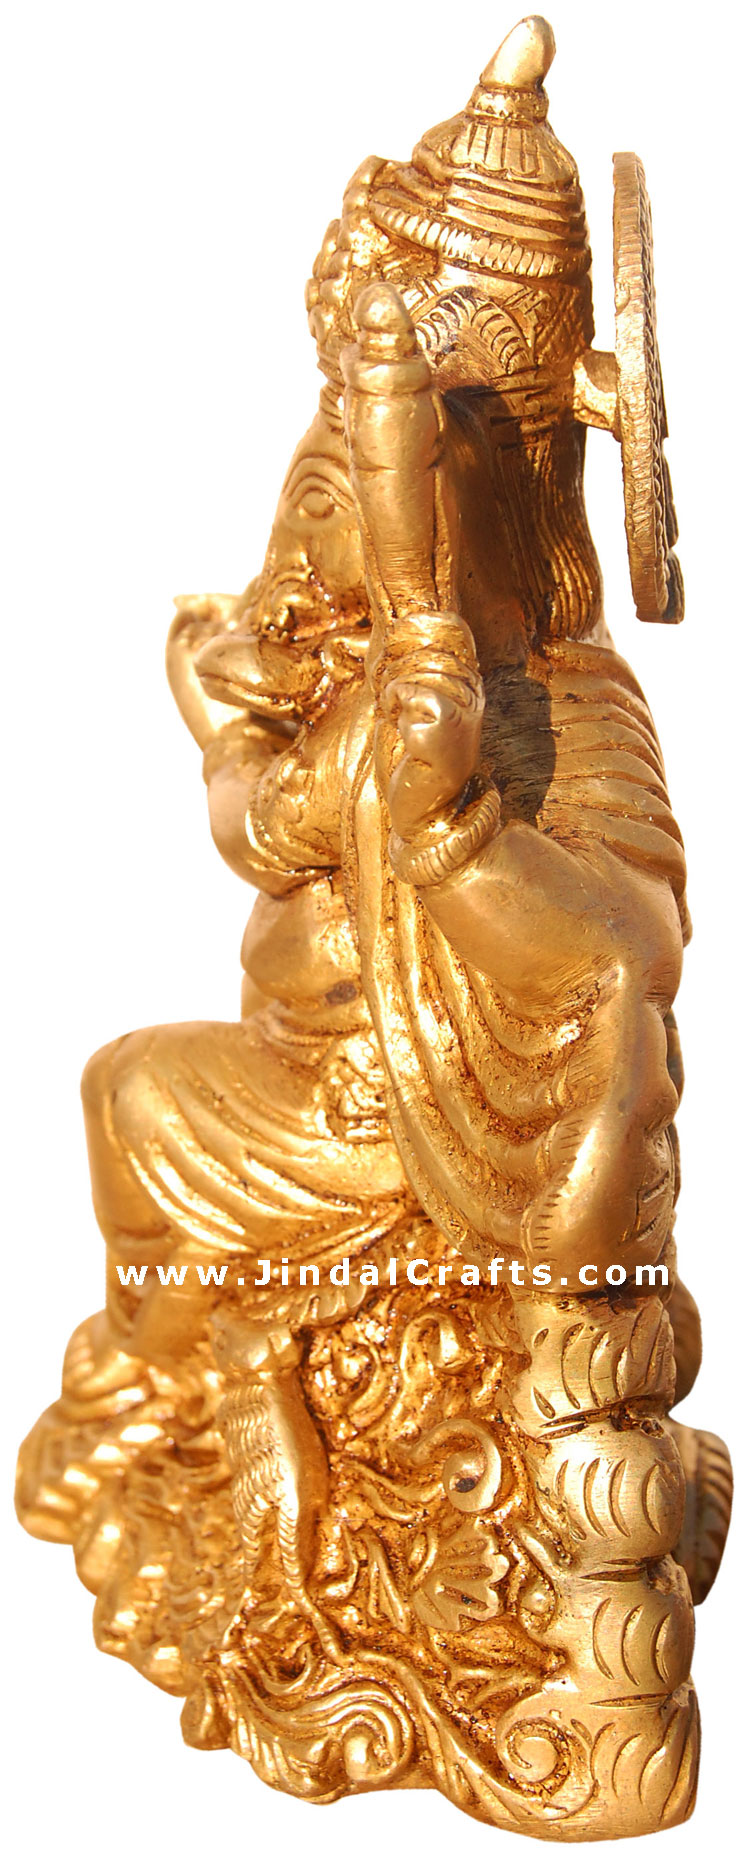 Lord Ganesh - Hindu God Figure Artifact made from Brass